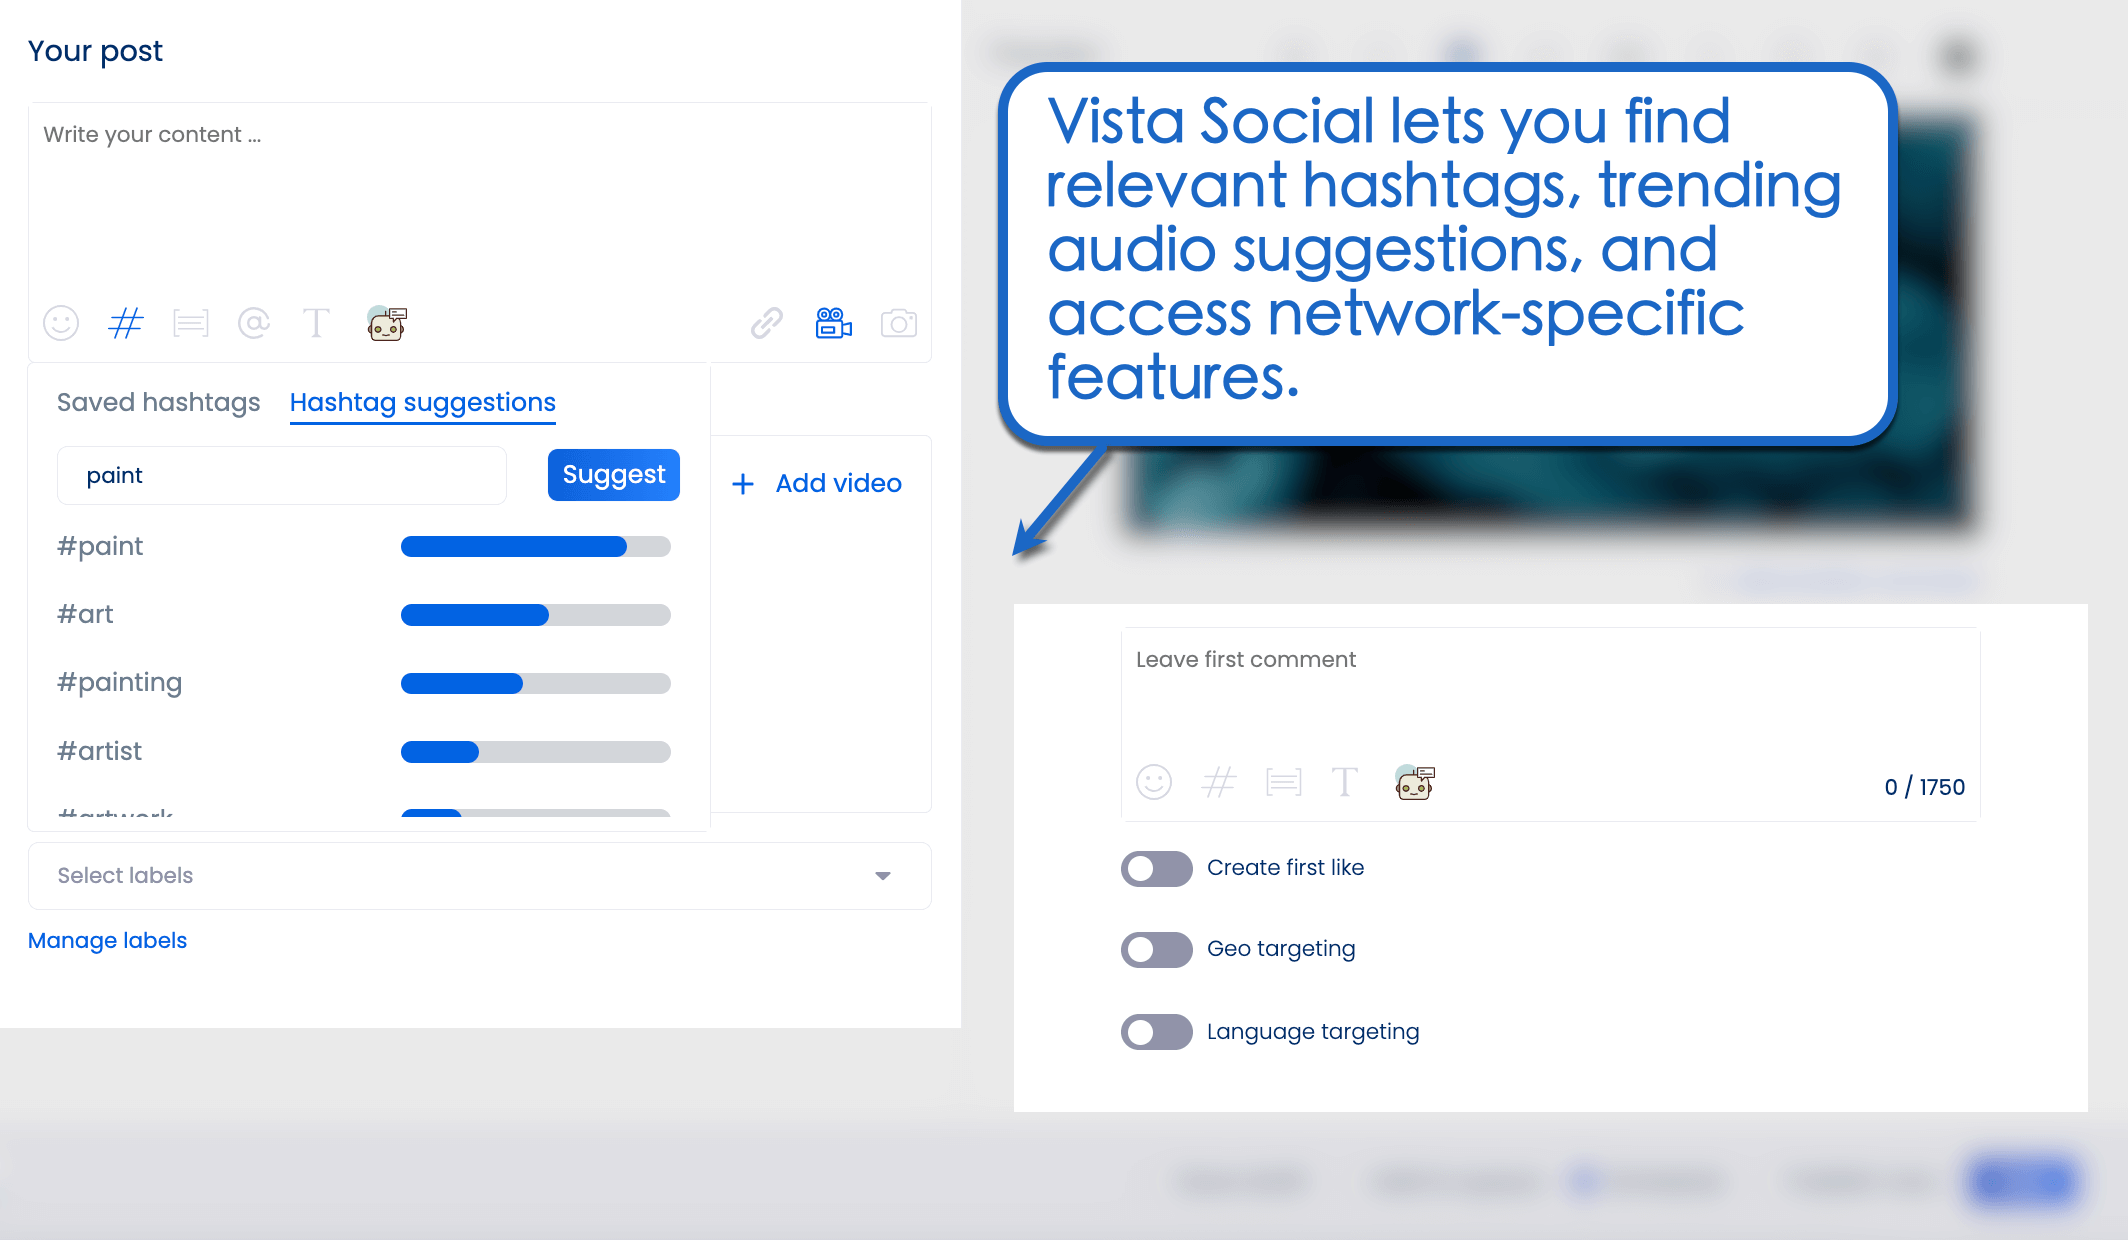 Hashtag options in Vista Social.